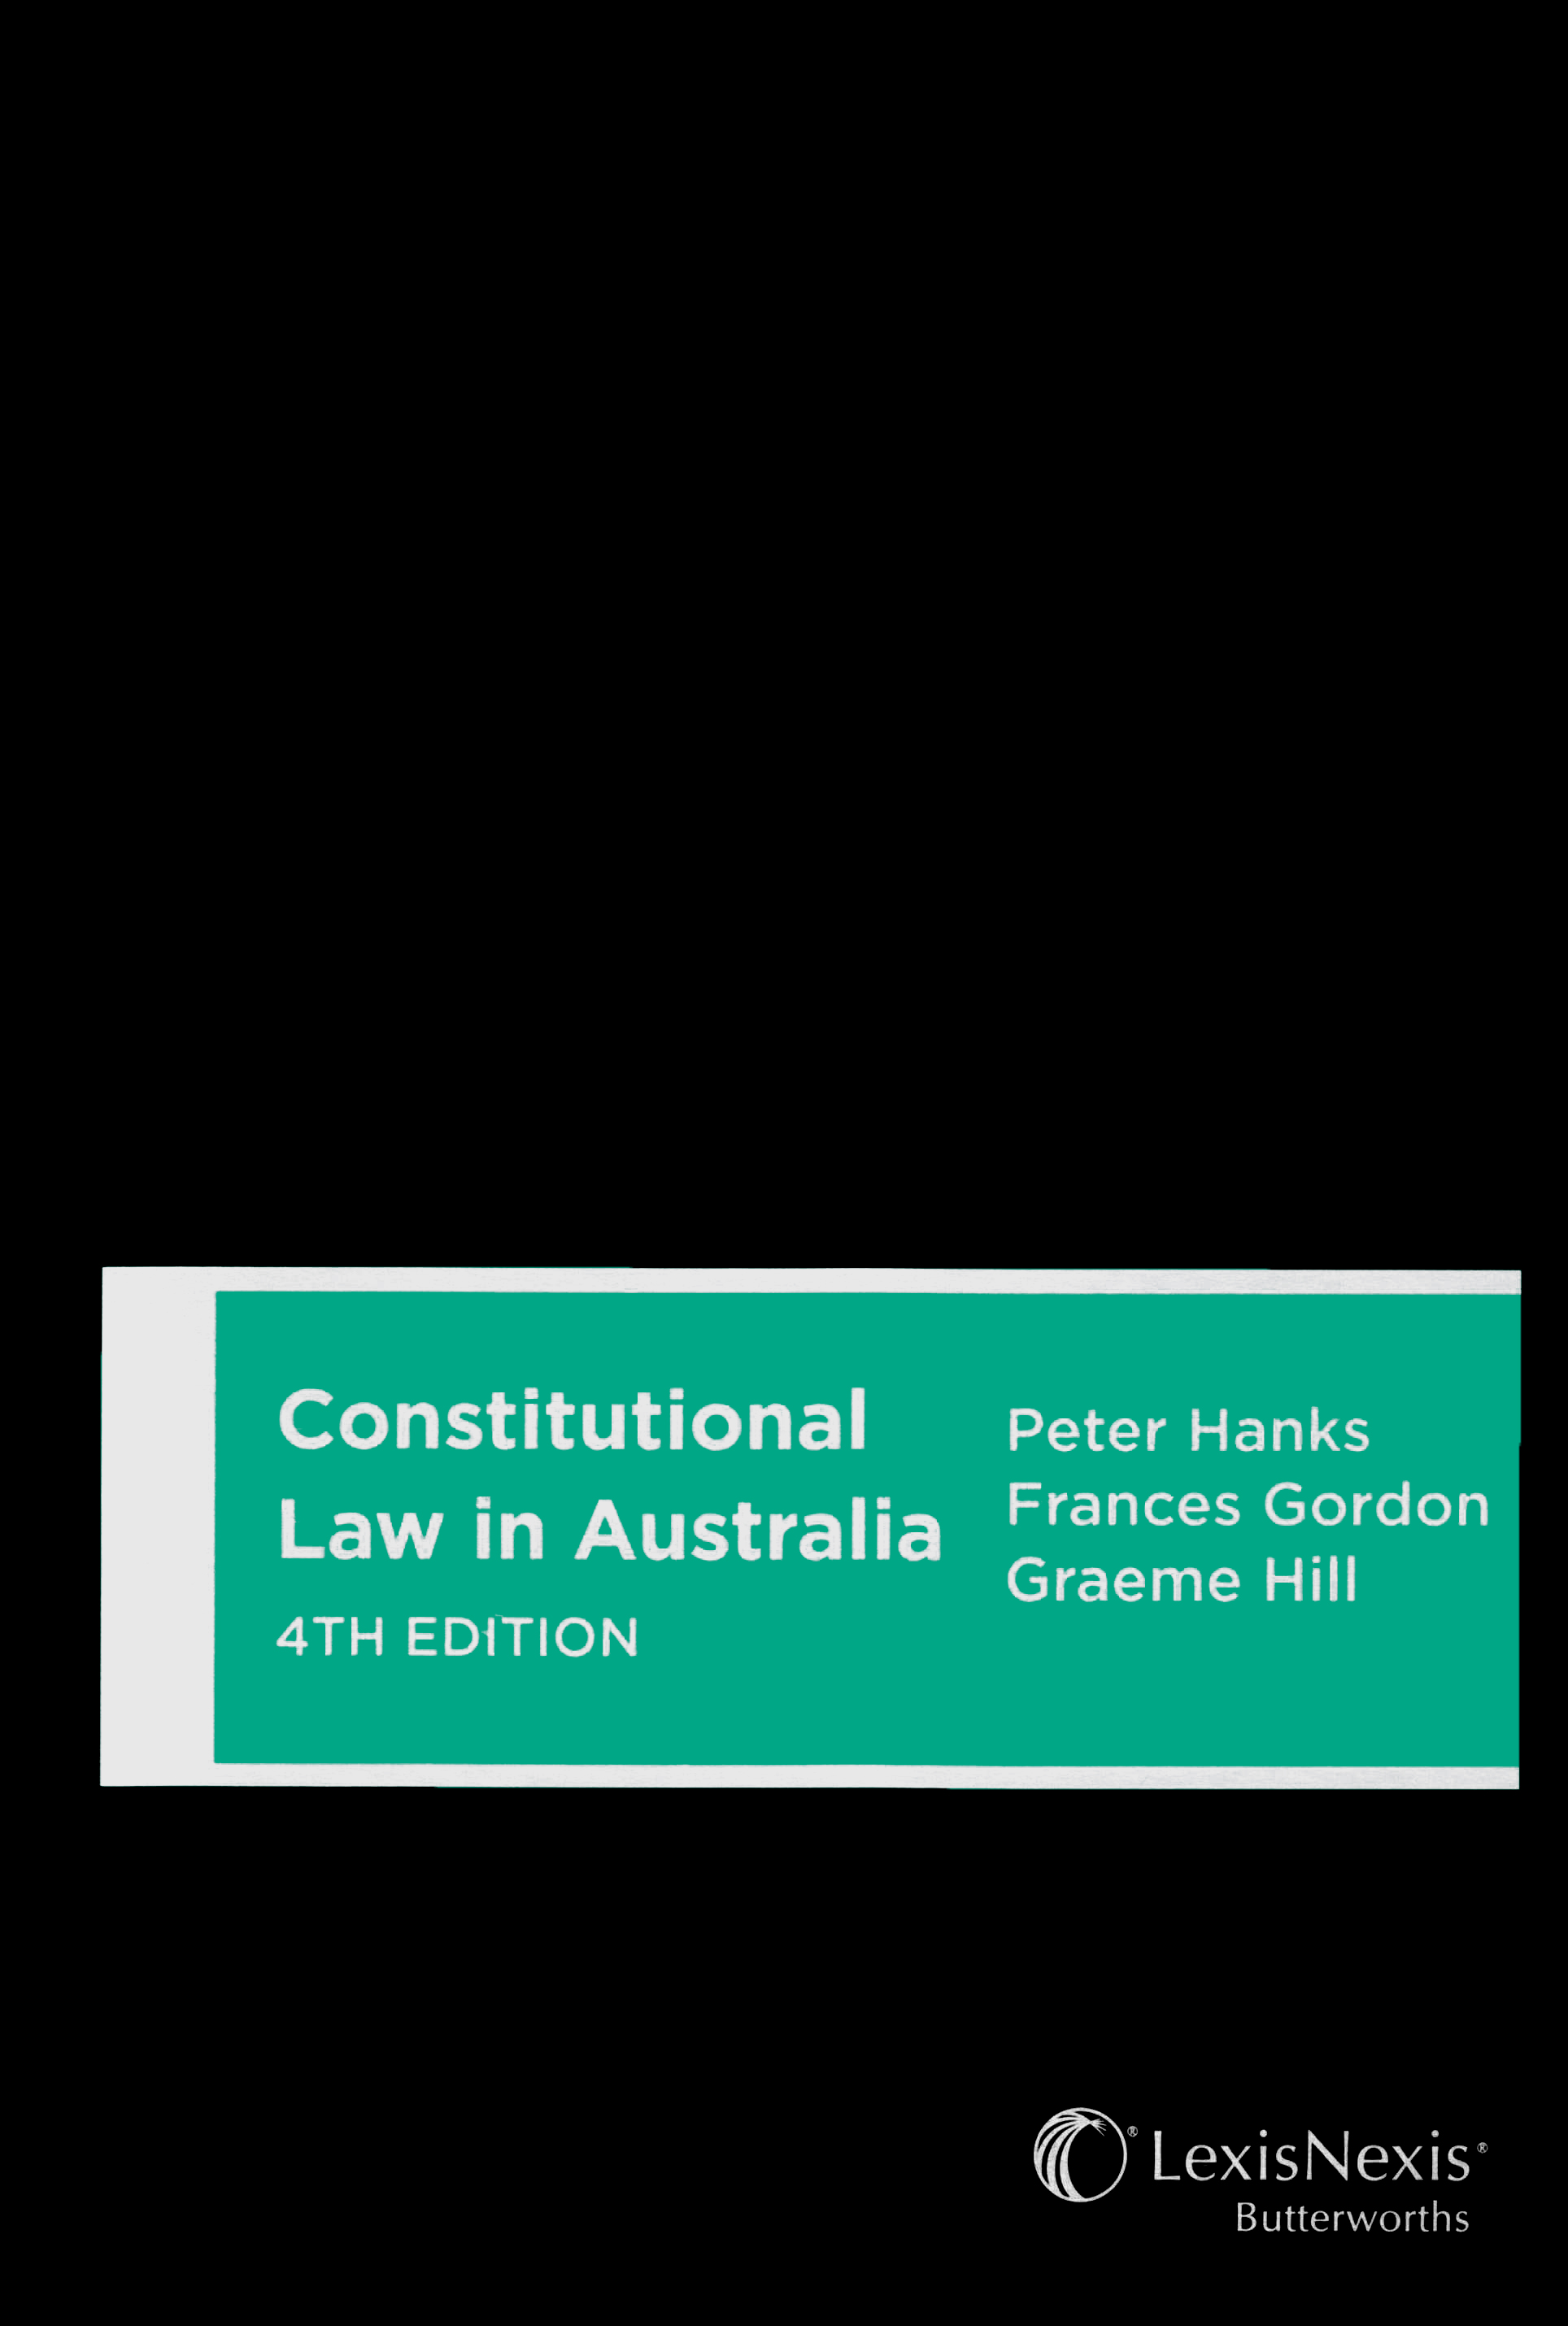 Constitutional Law in Australia e4 (Softcover)